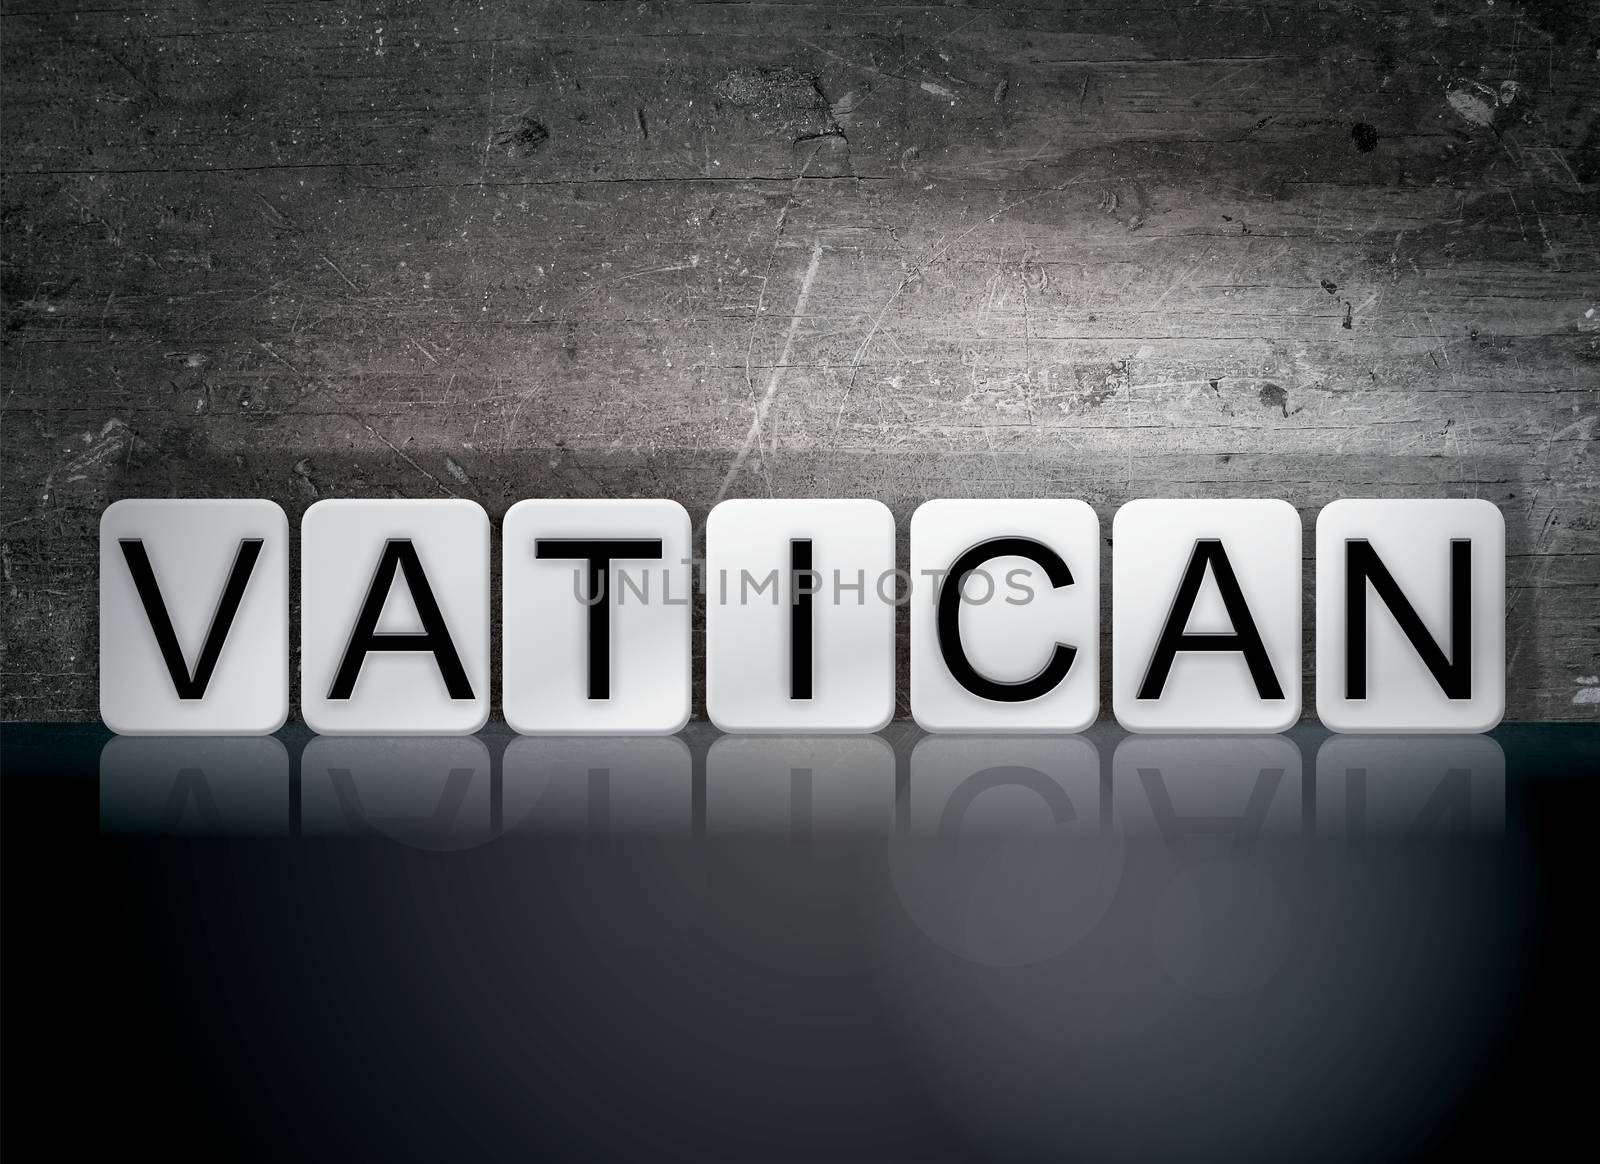 The word "Vatican" written in white tiles against a dark vintage grunge background.